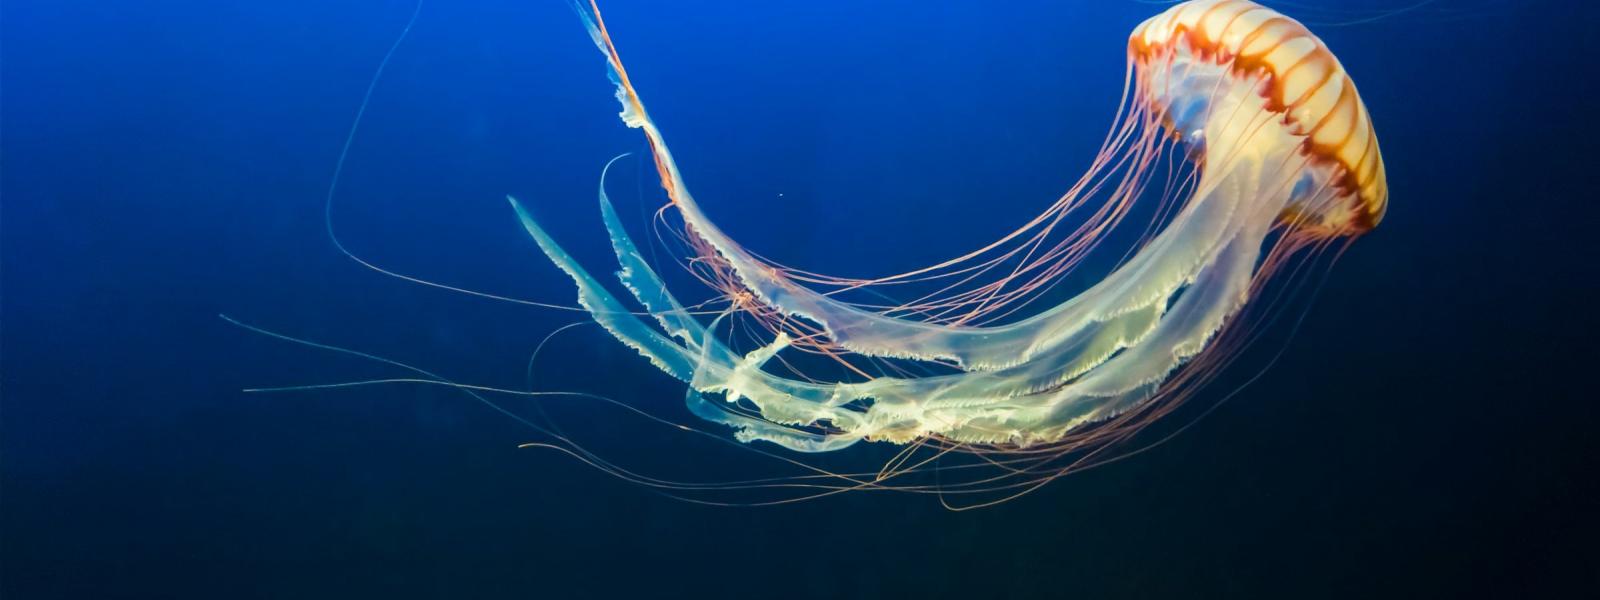 Medusa flotando en el fondo marino.